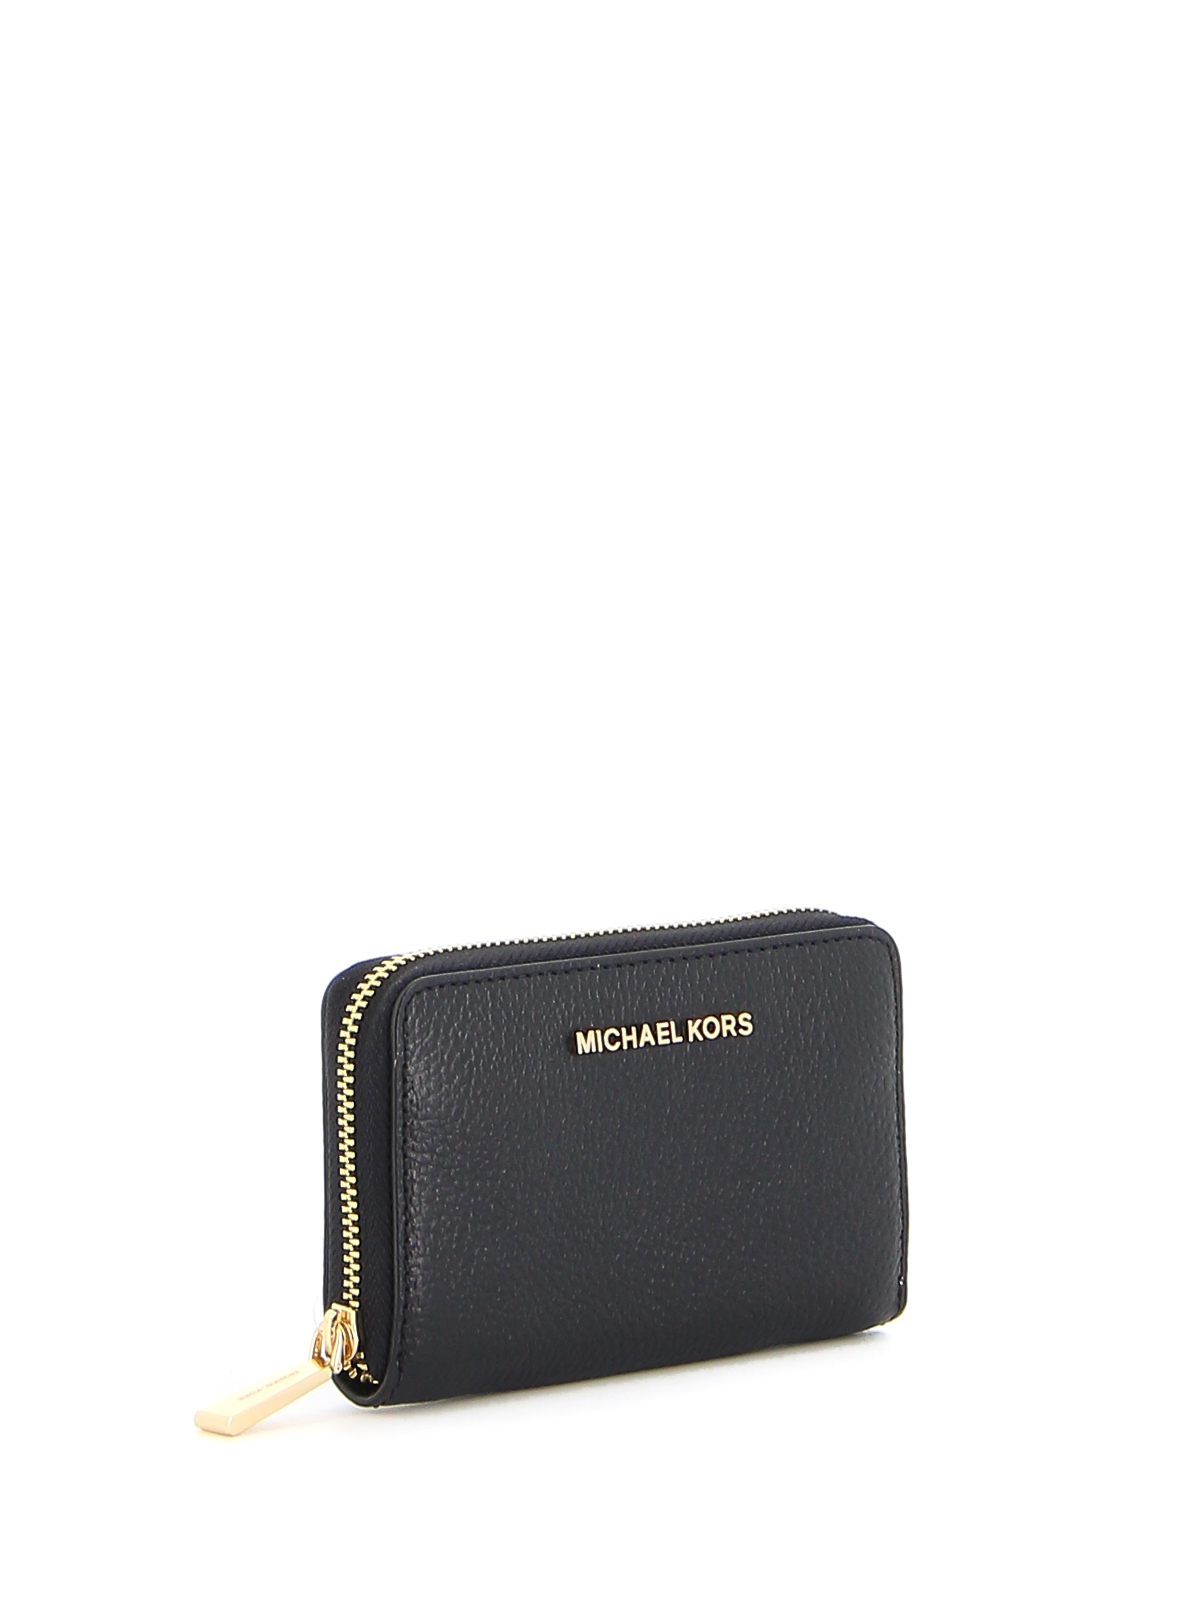 MK small wallet